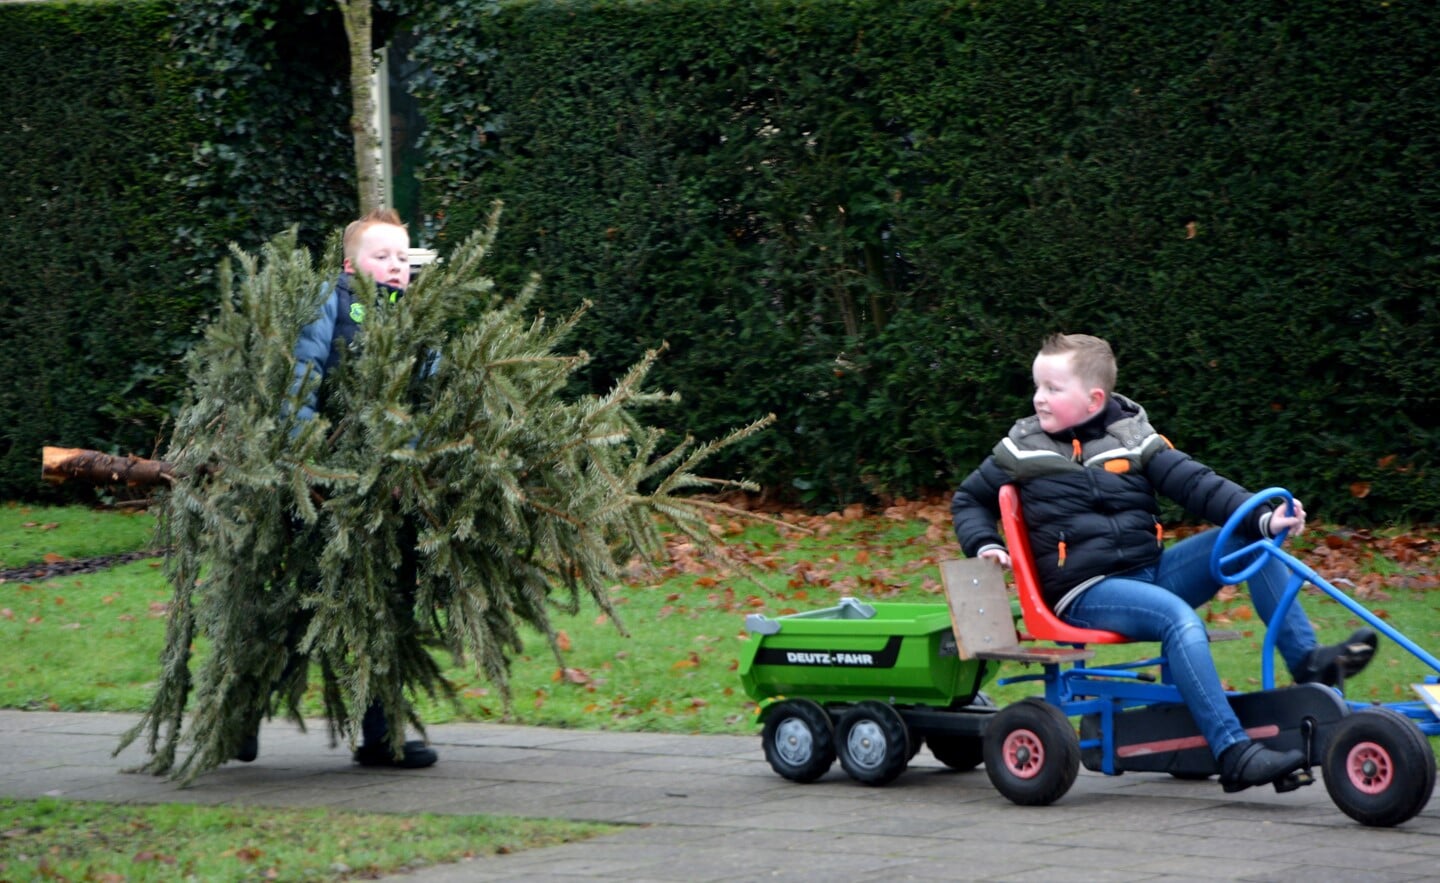 Inzameling kerstbomen in Barneveld.